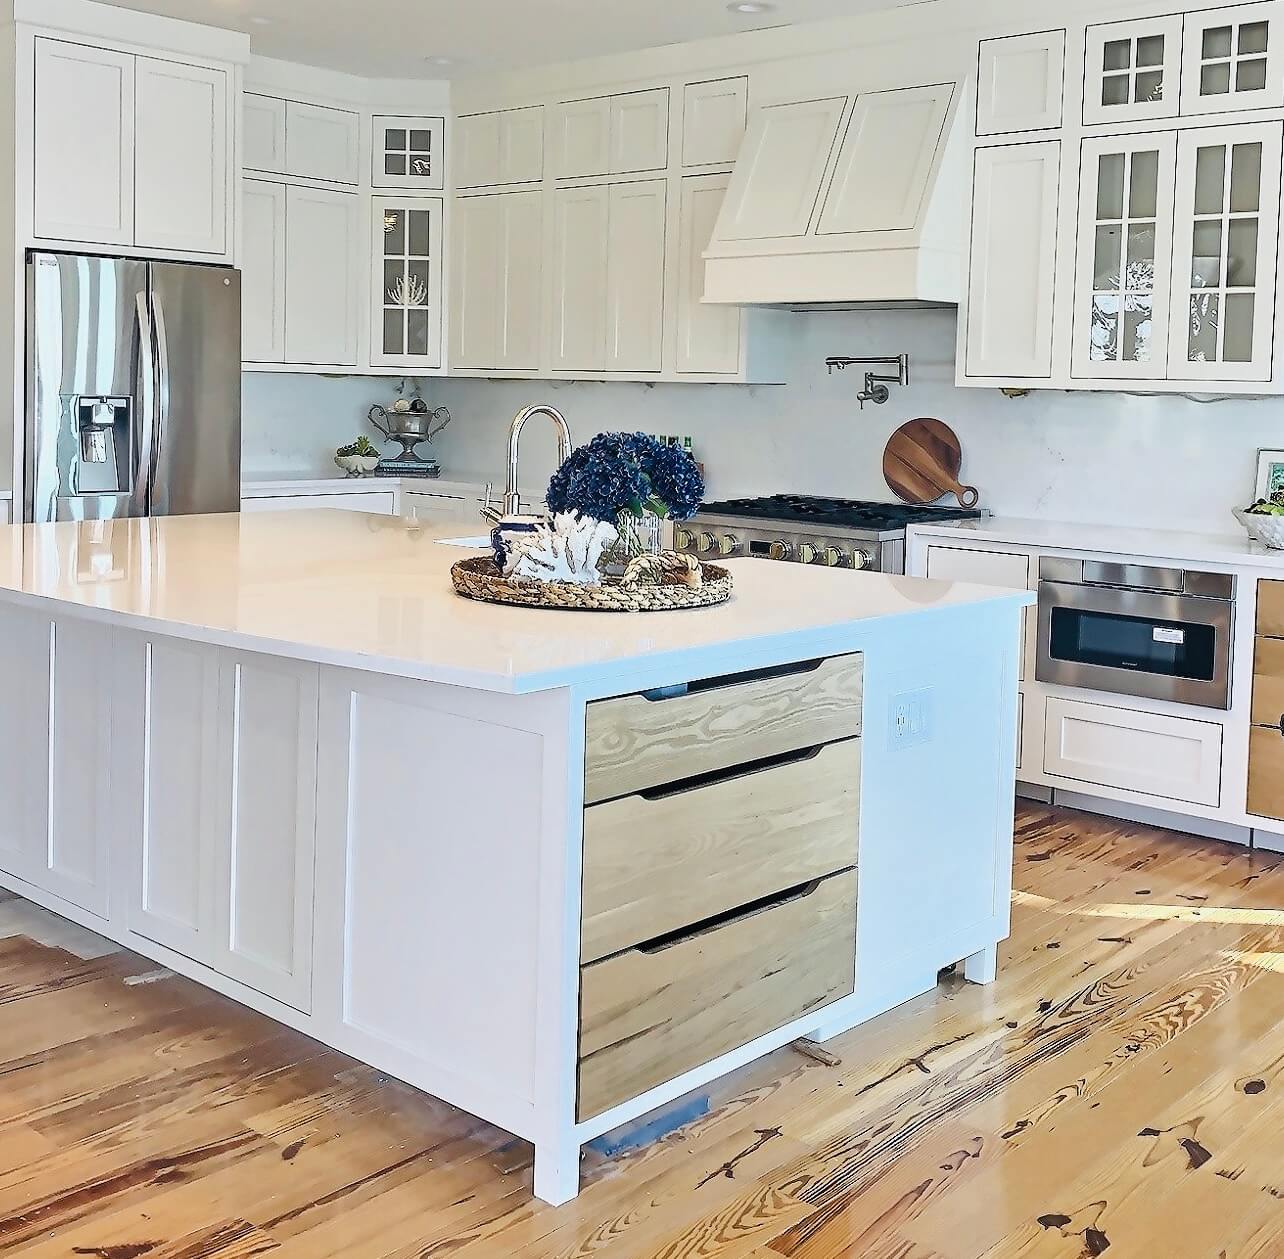 Modern kitchen by Sea Light Design-Build Best Renovation on Pine Rd in Selbyville DE